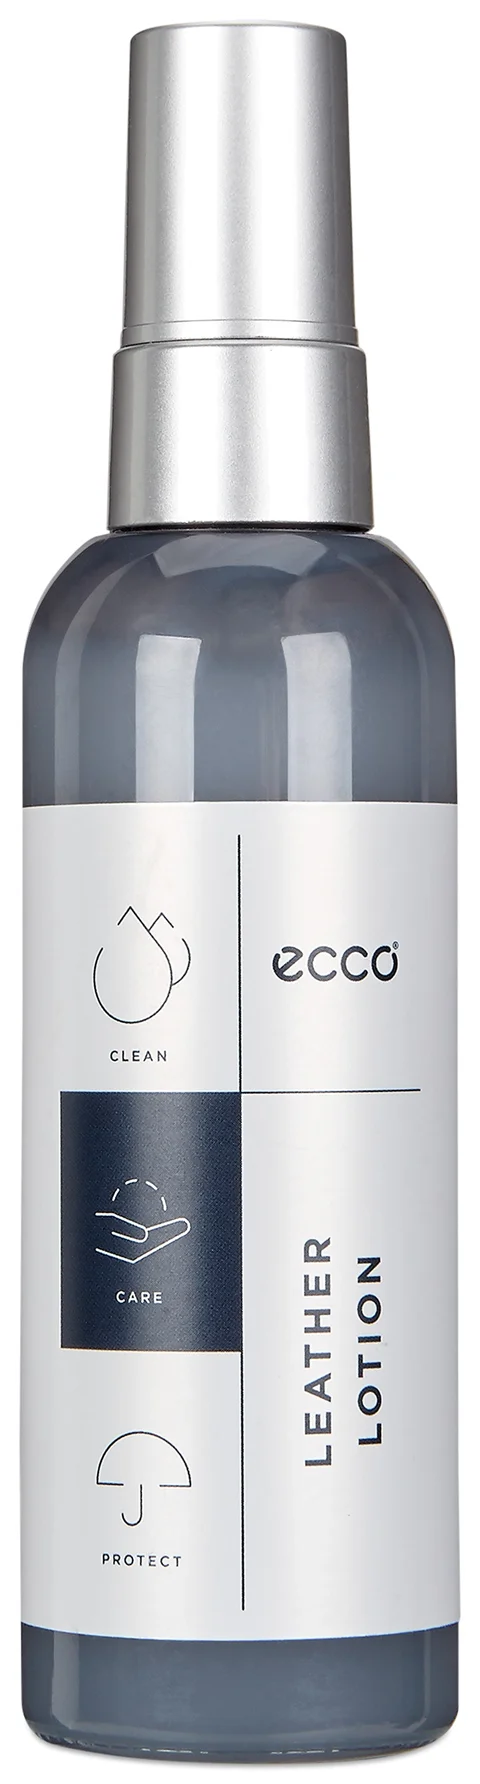 ECCO Leather Lotion - Transparent - Main